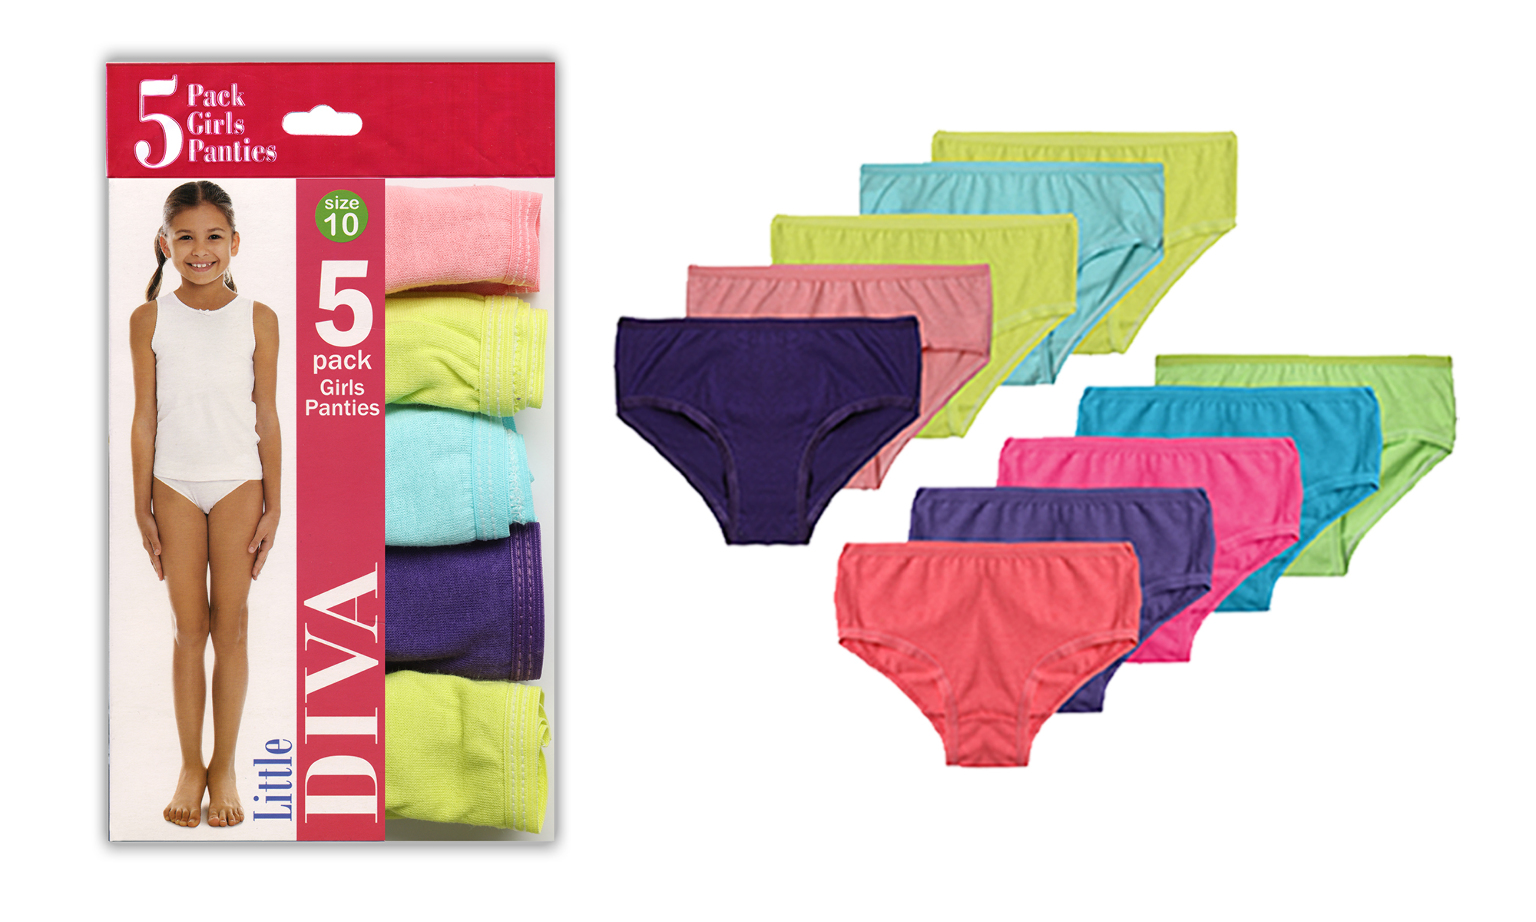 Bulk Girl's Panties - 5 Pack, Assorted Colors, Size 14 - DollarDays